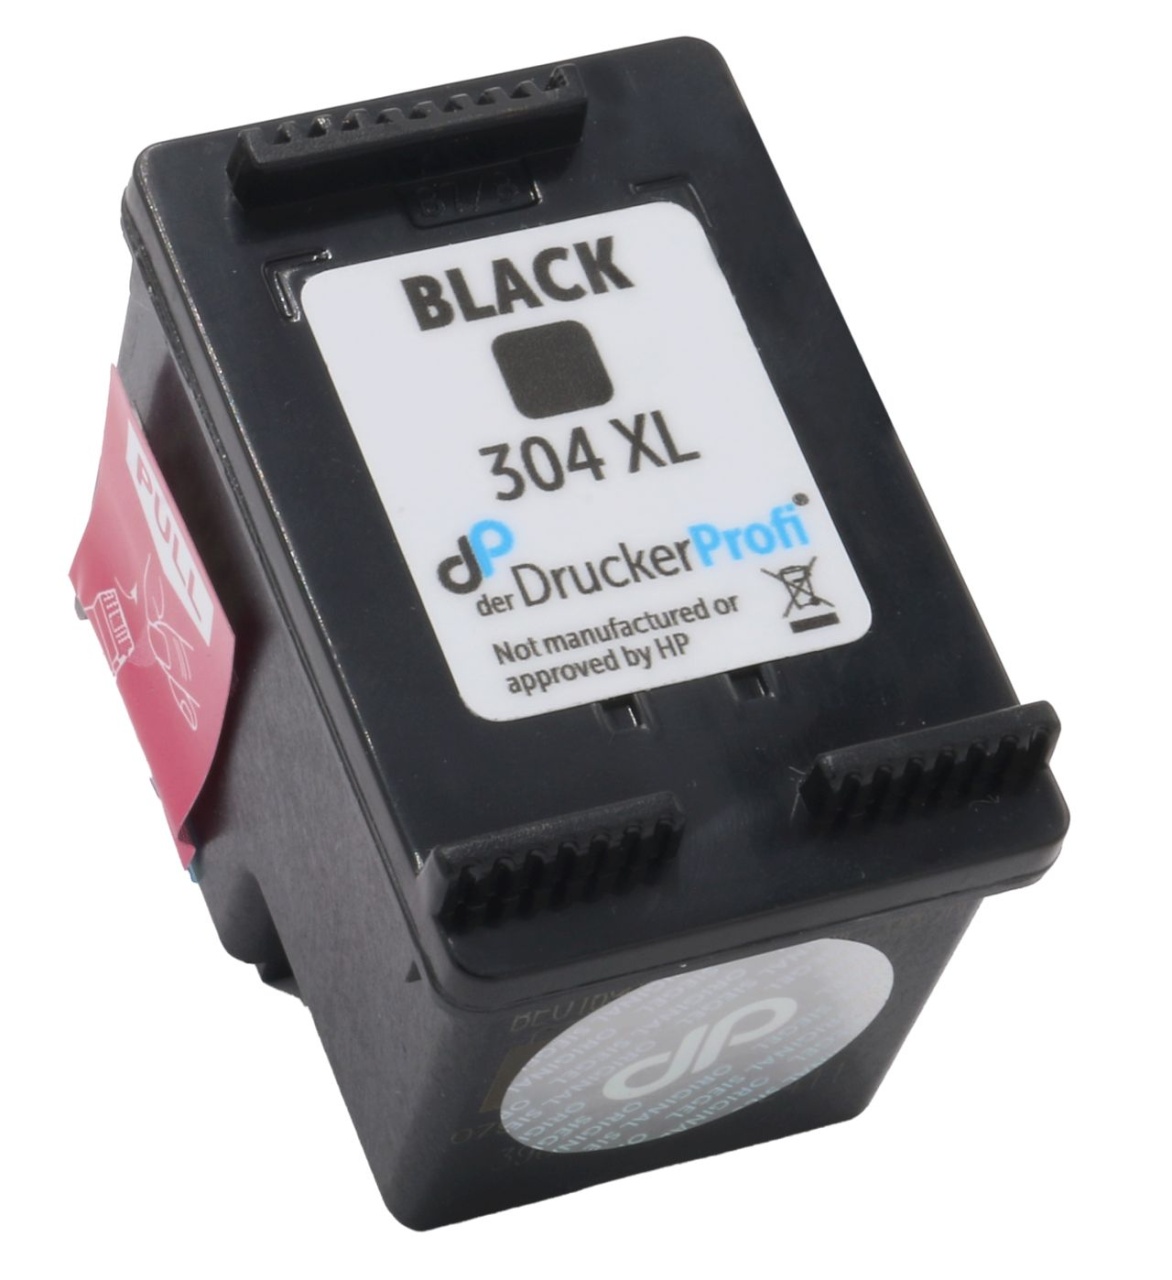 Kompatibel zu HP 304 XL Multipack Tinte schwarz + color - Der DruckerProfi